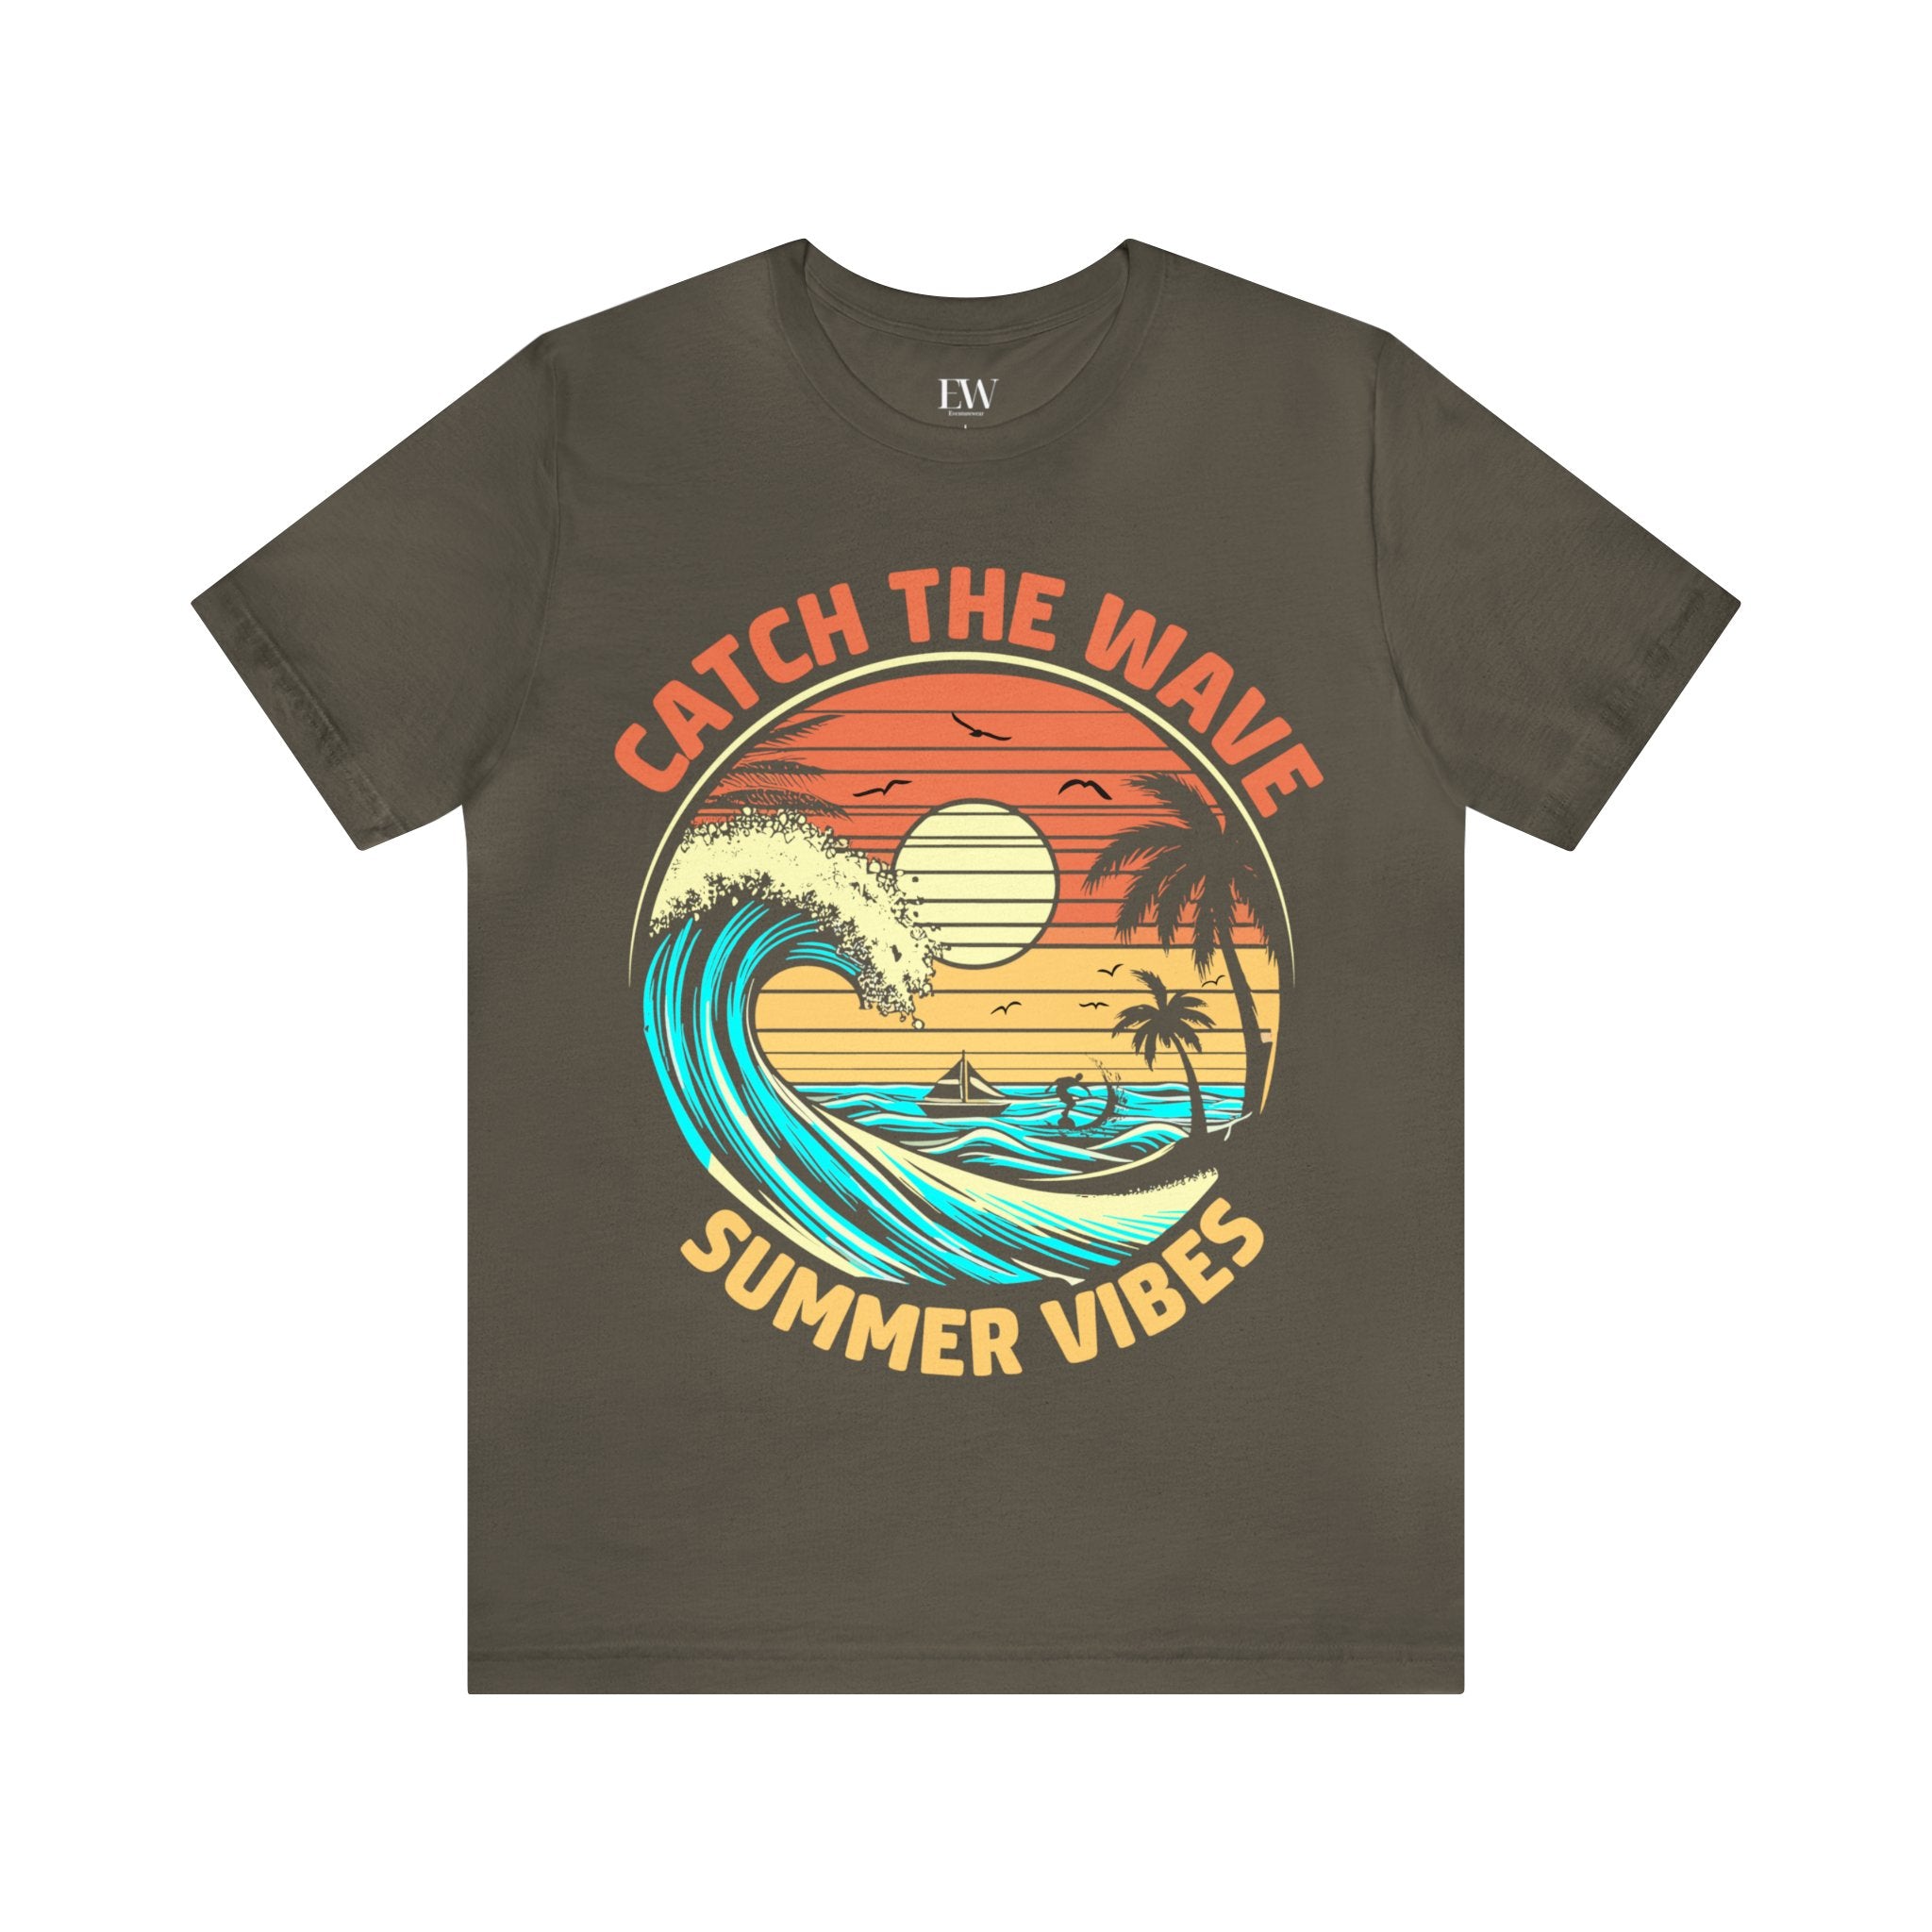 "Catch The Wave" Vintage Shirt